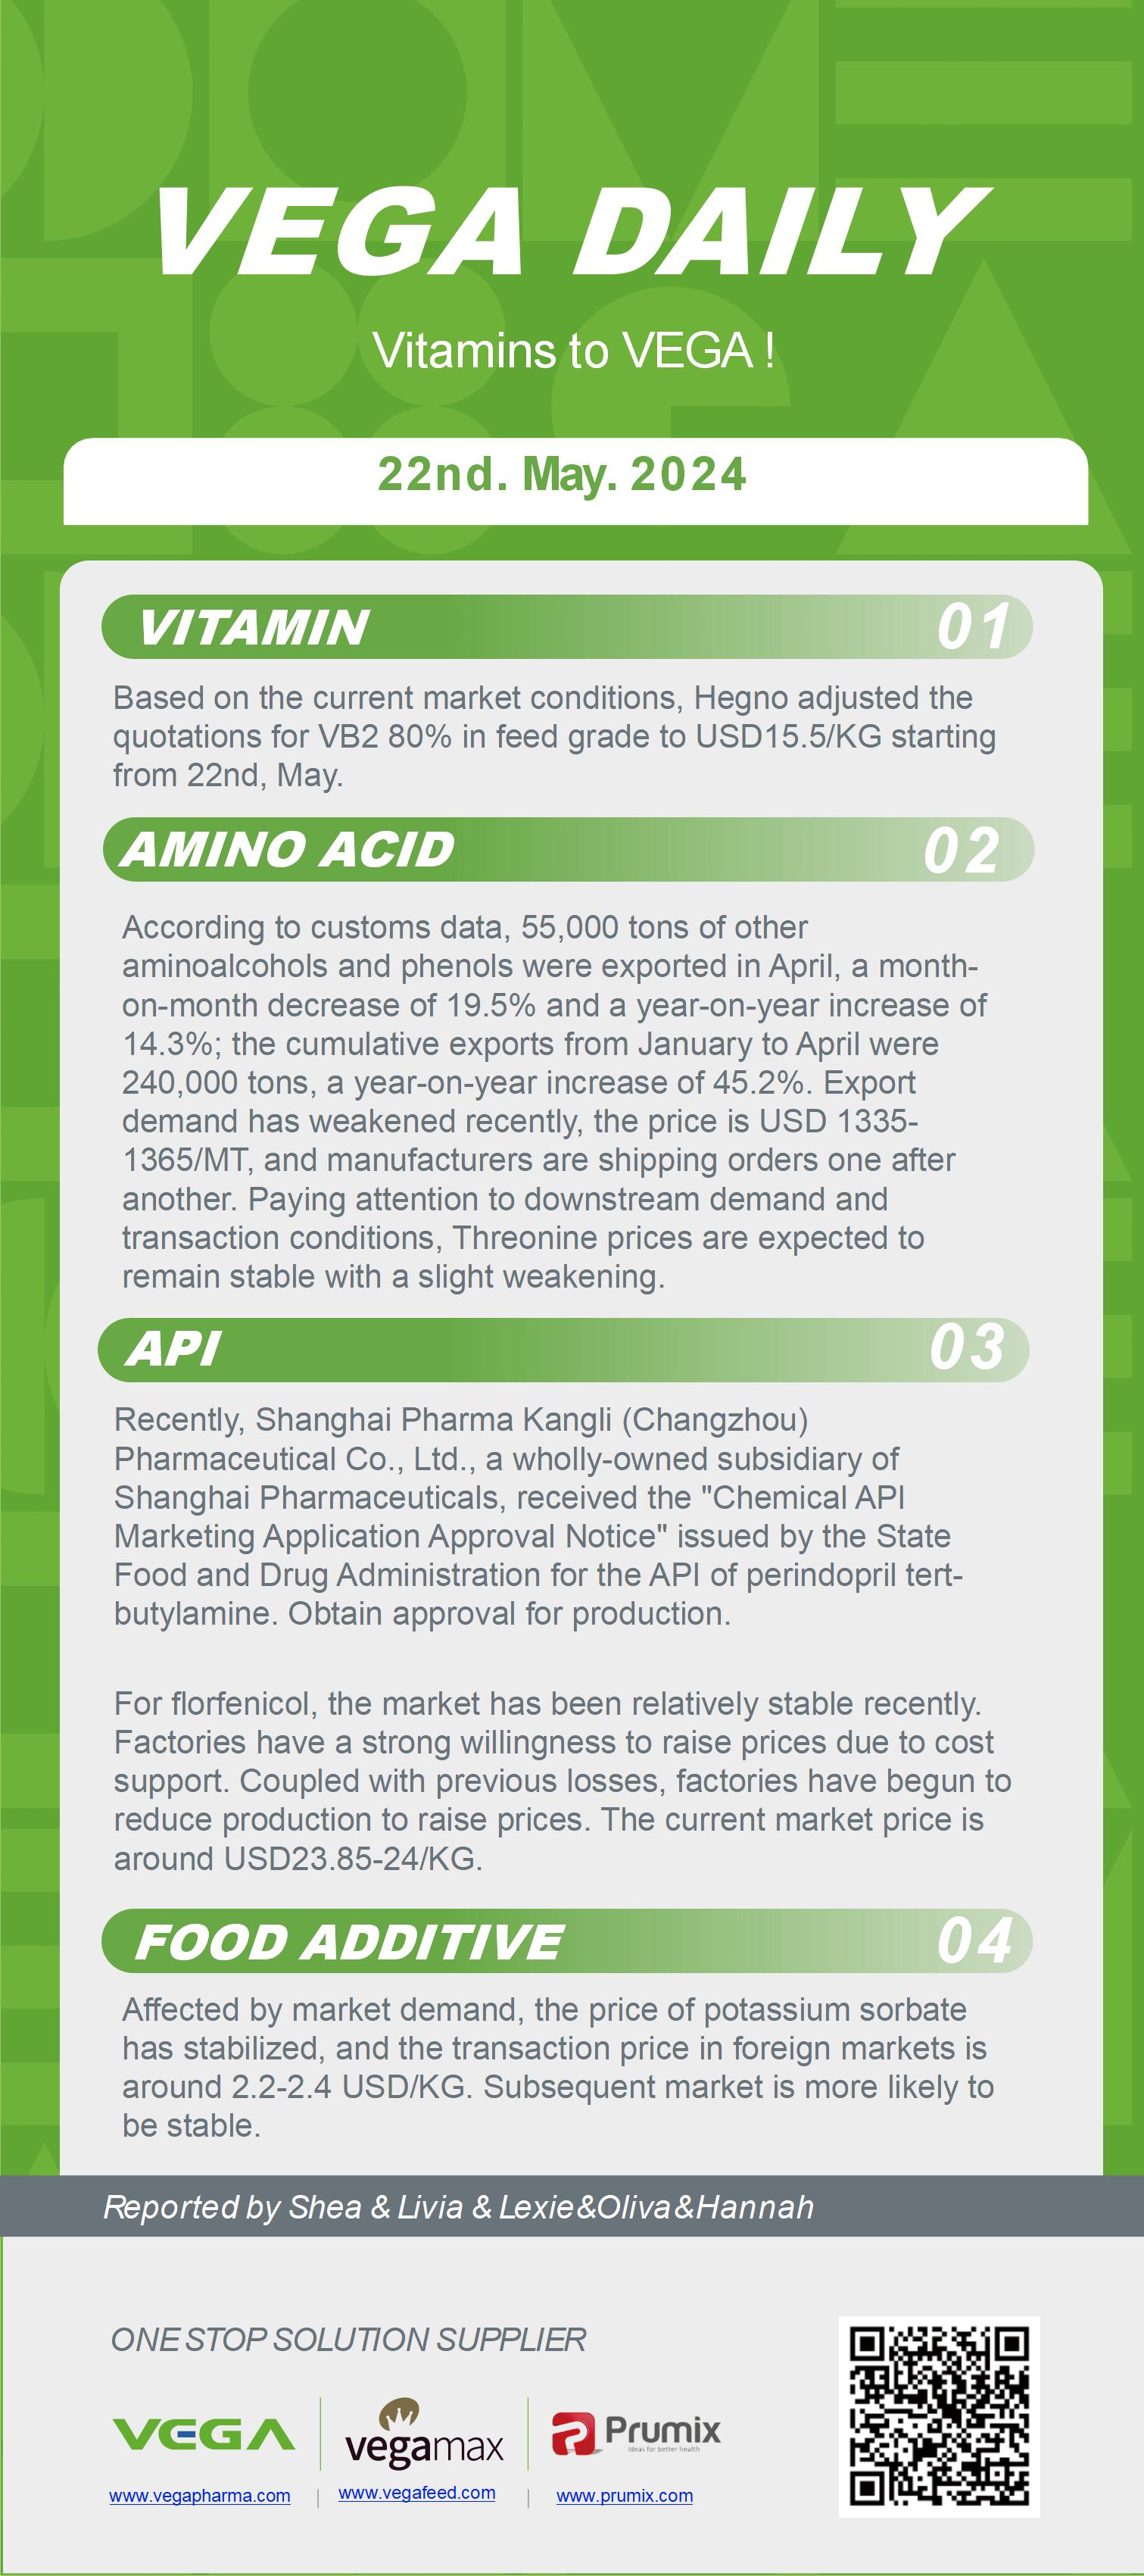 Vega Daily Dated on May 22nd 2024 Vitamin Amino Acid APl Food Additives.jpg